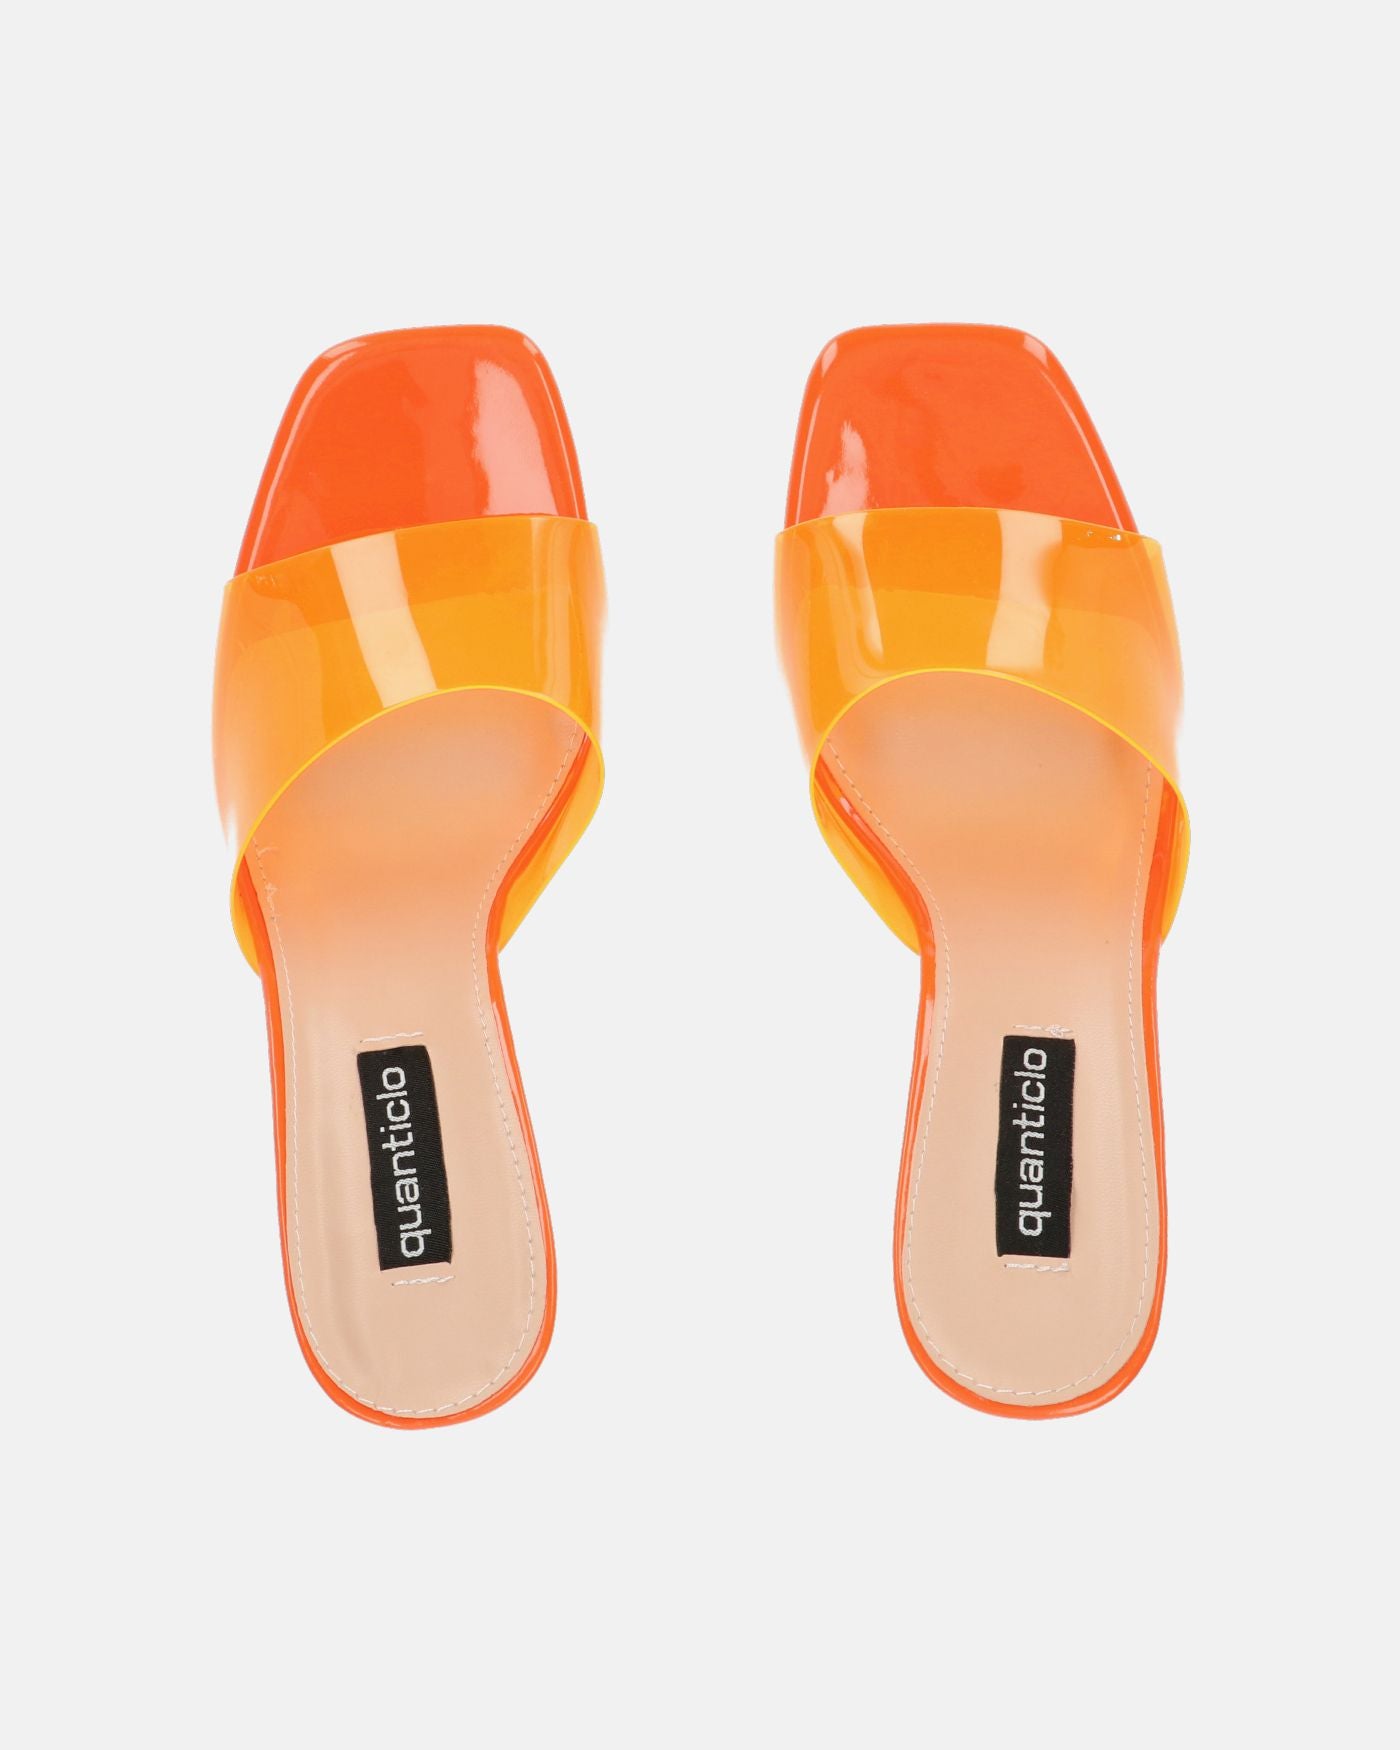 FIAMMA - orange perspex heeled sandal with PU sole